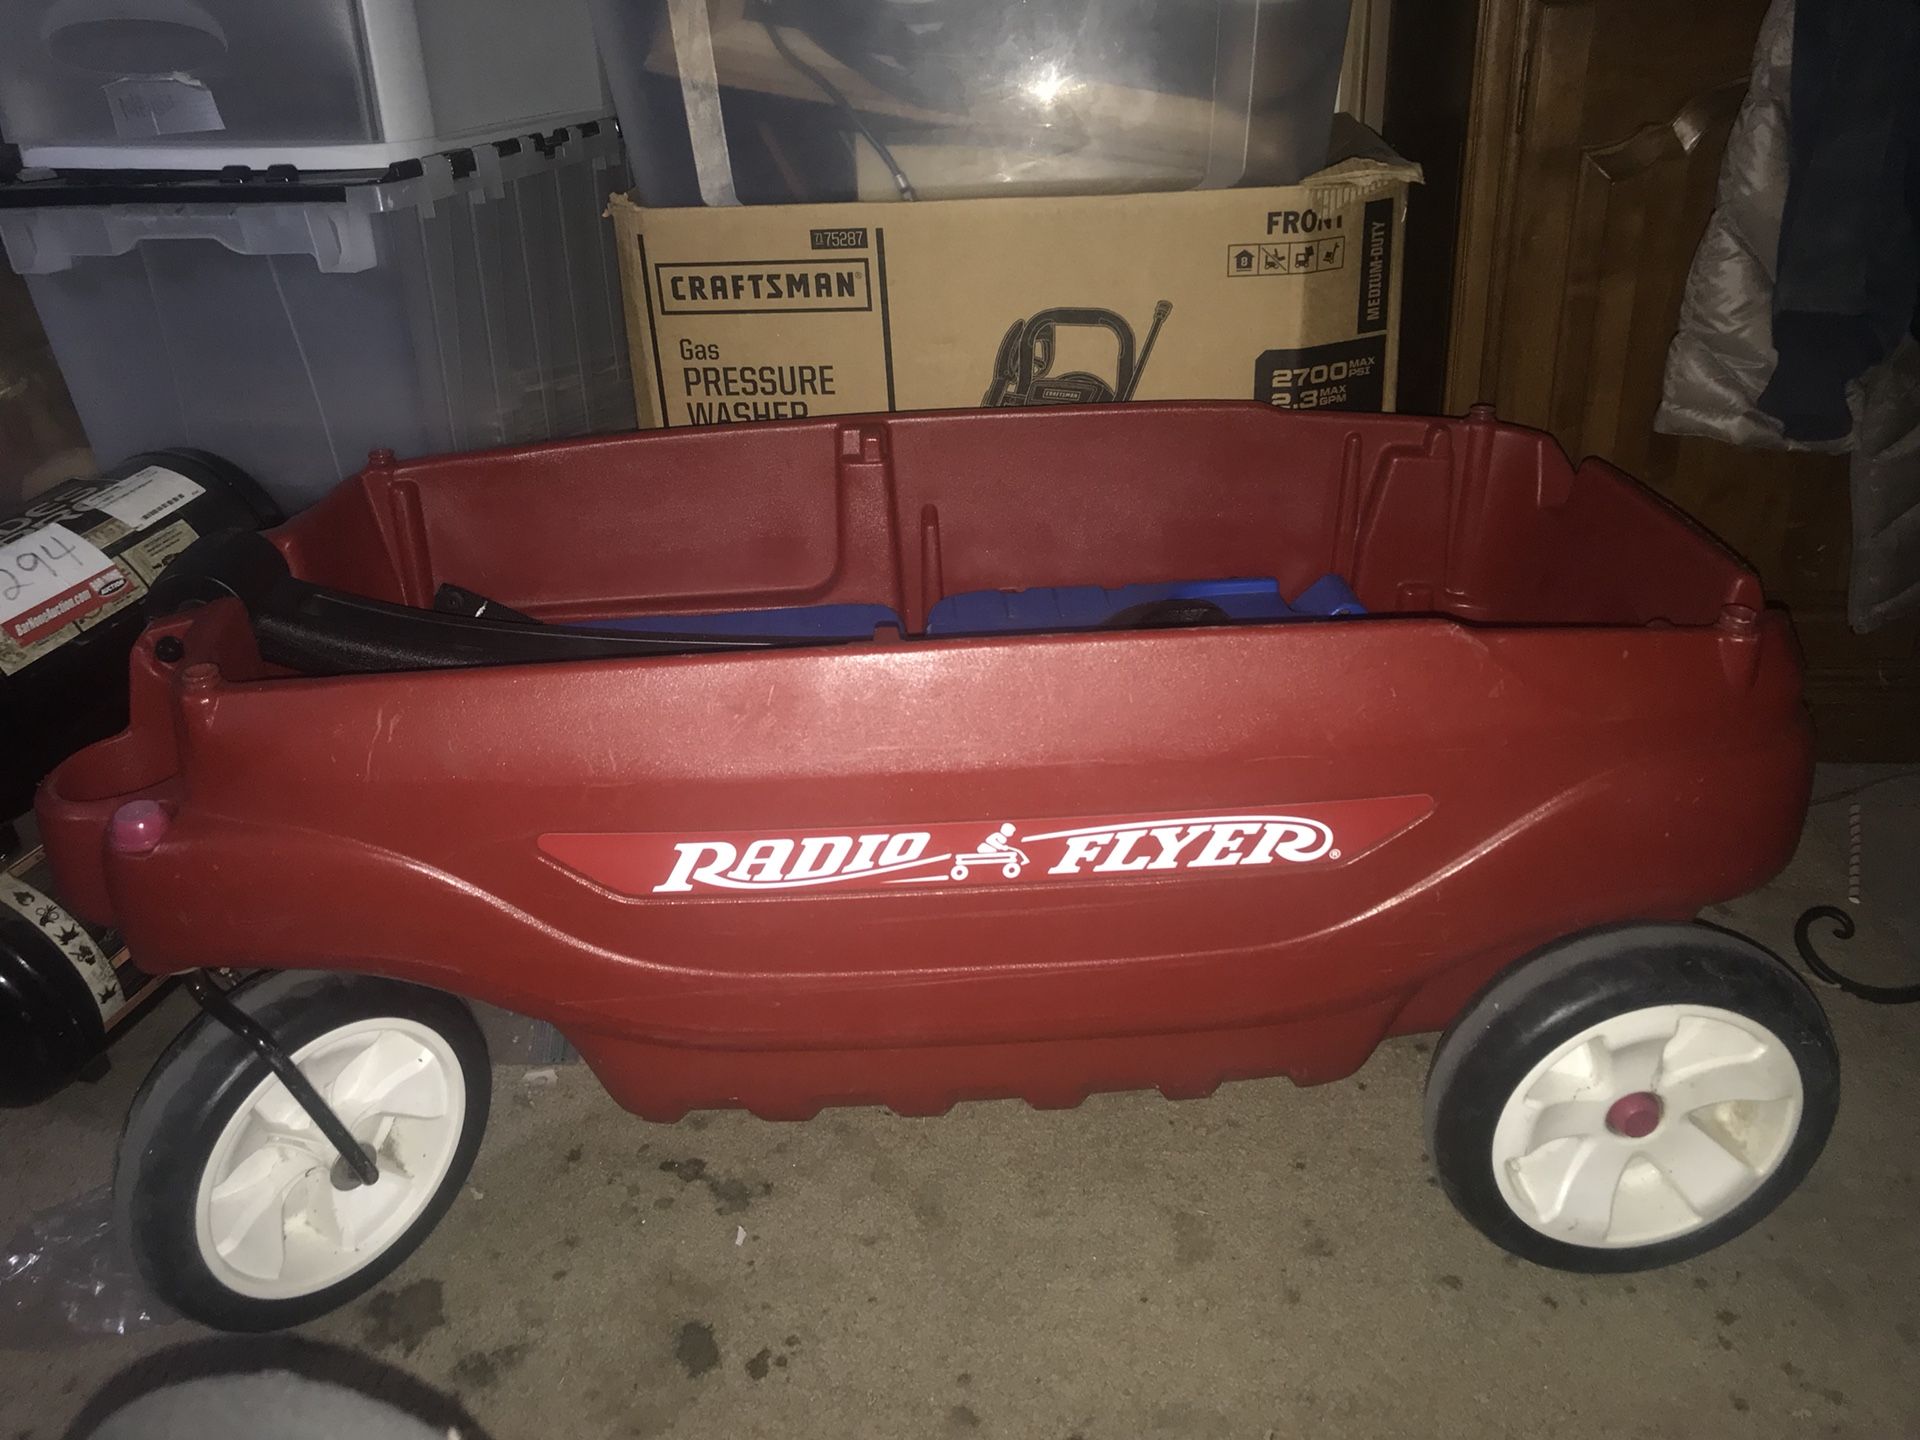 Kids toy red wagon